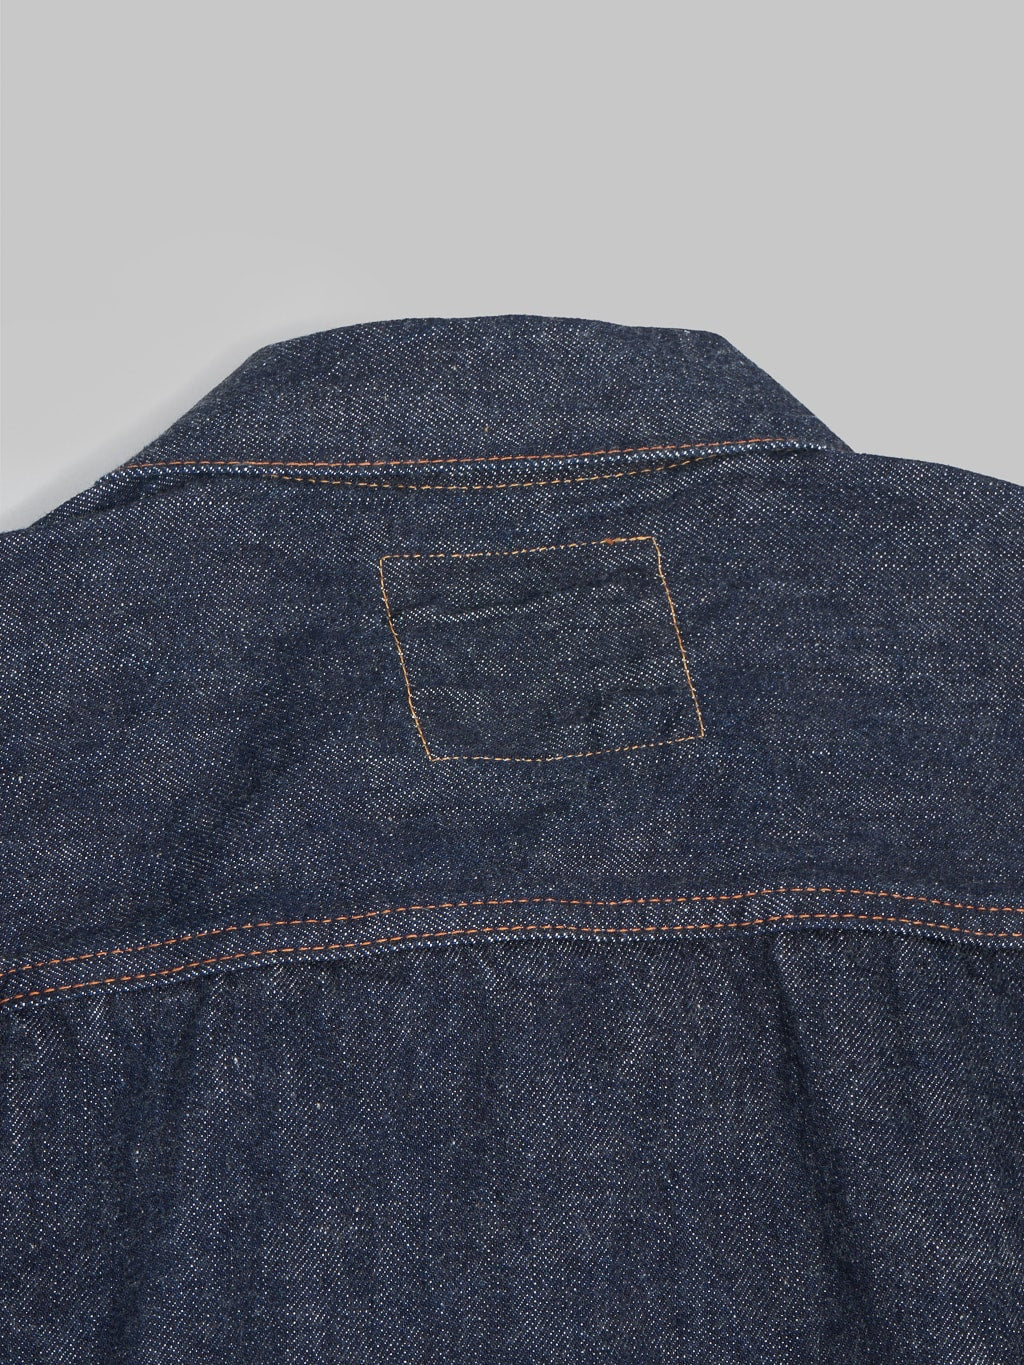 fullcount 2102 type 2 denim jacket selvedge stitching